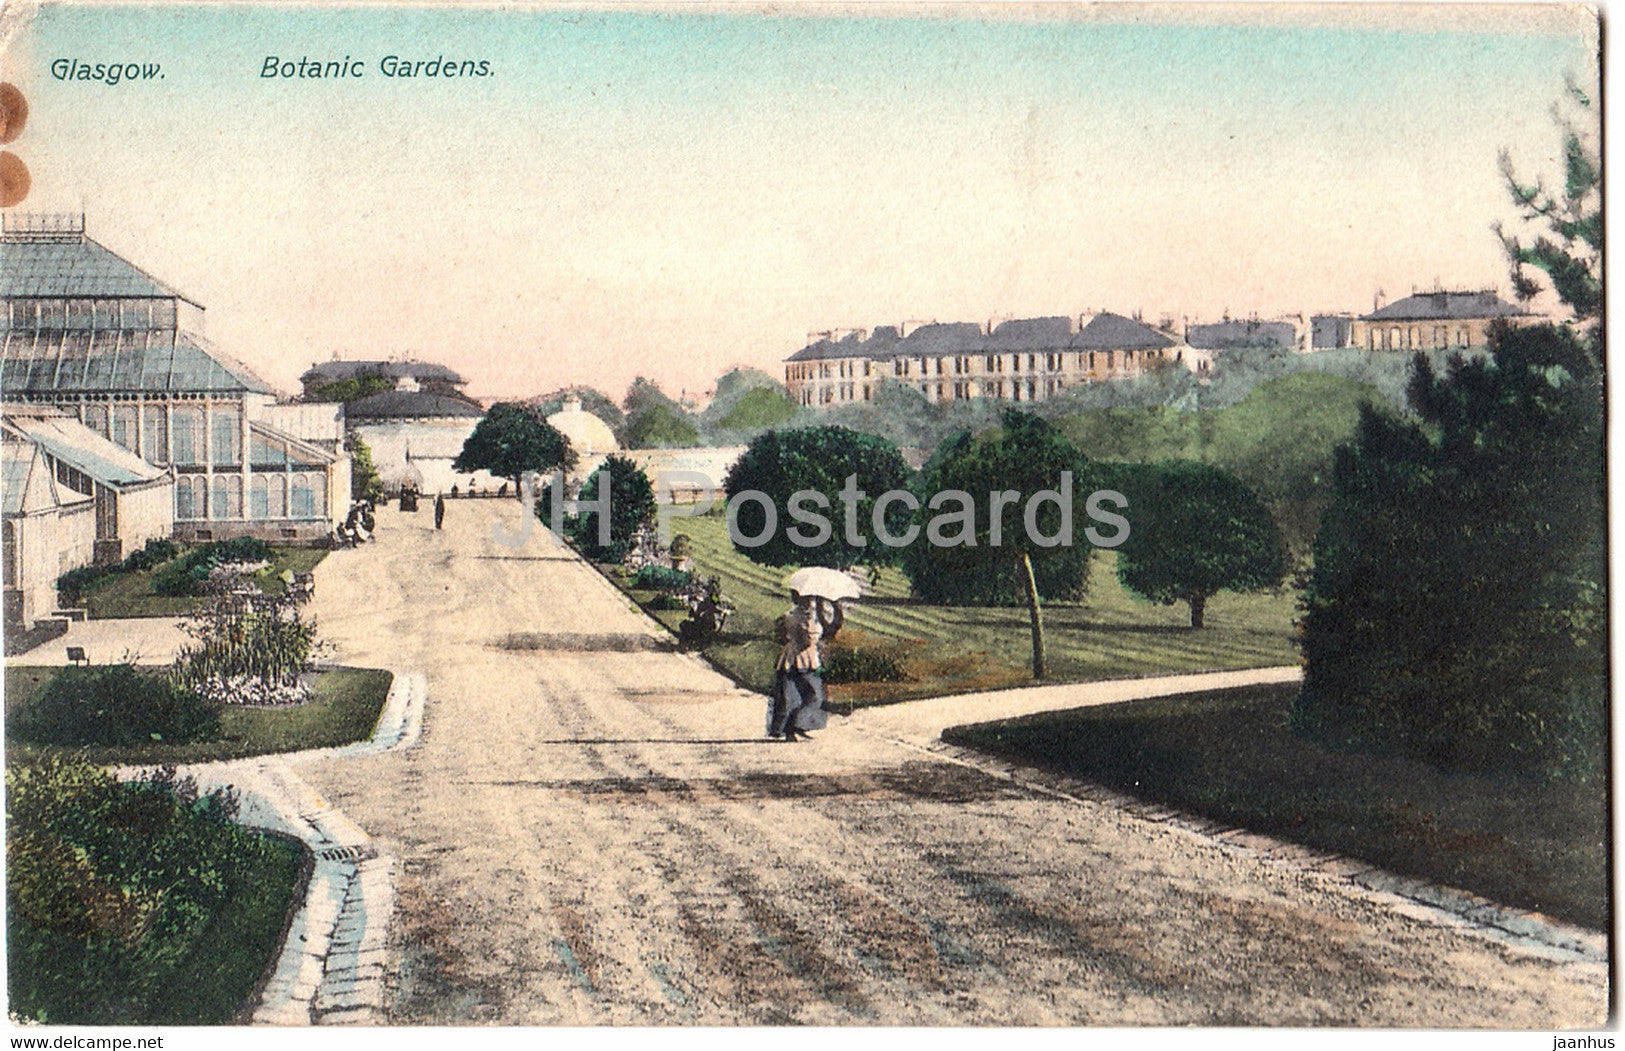 Glasgow - Botanic Gardens - old postcard - Scotland - United Kingdom - unused - JH Postcards